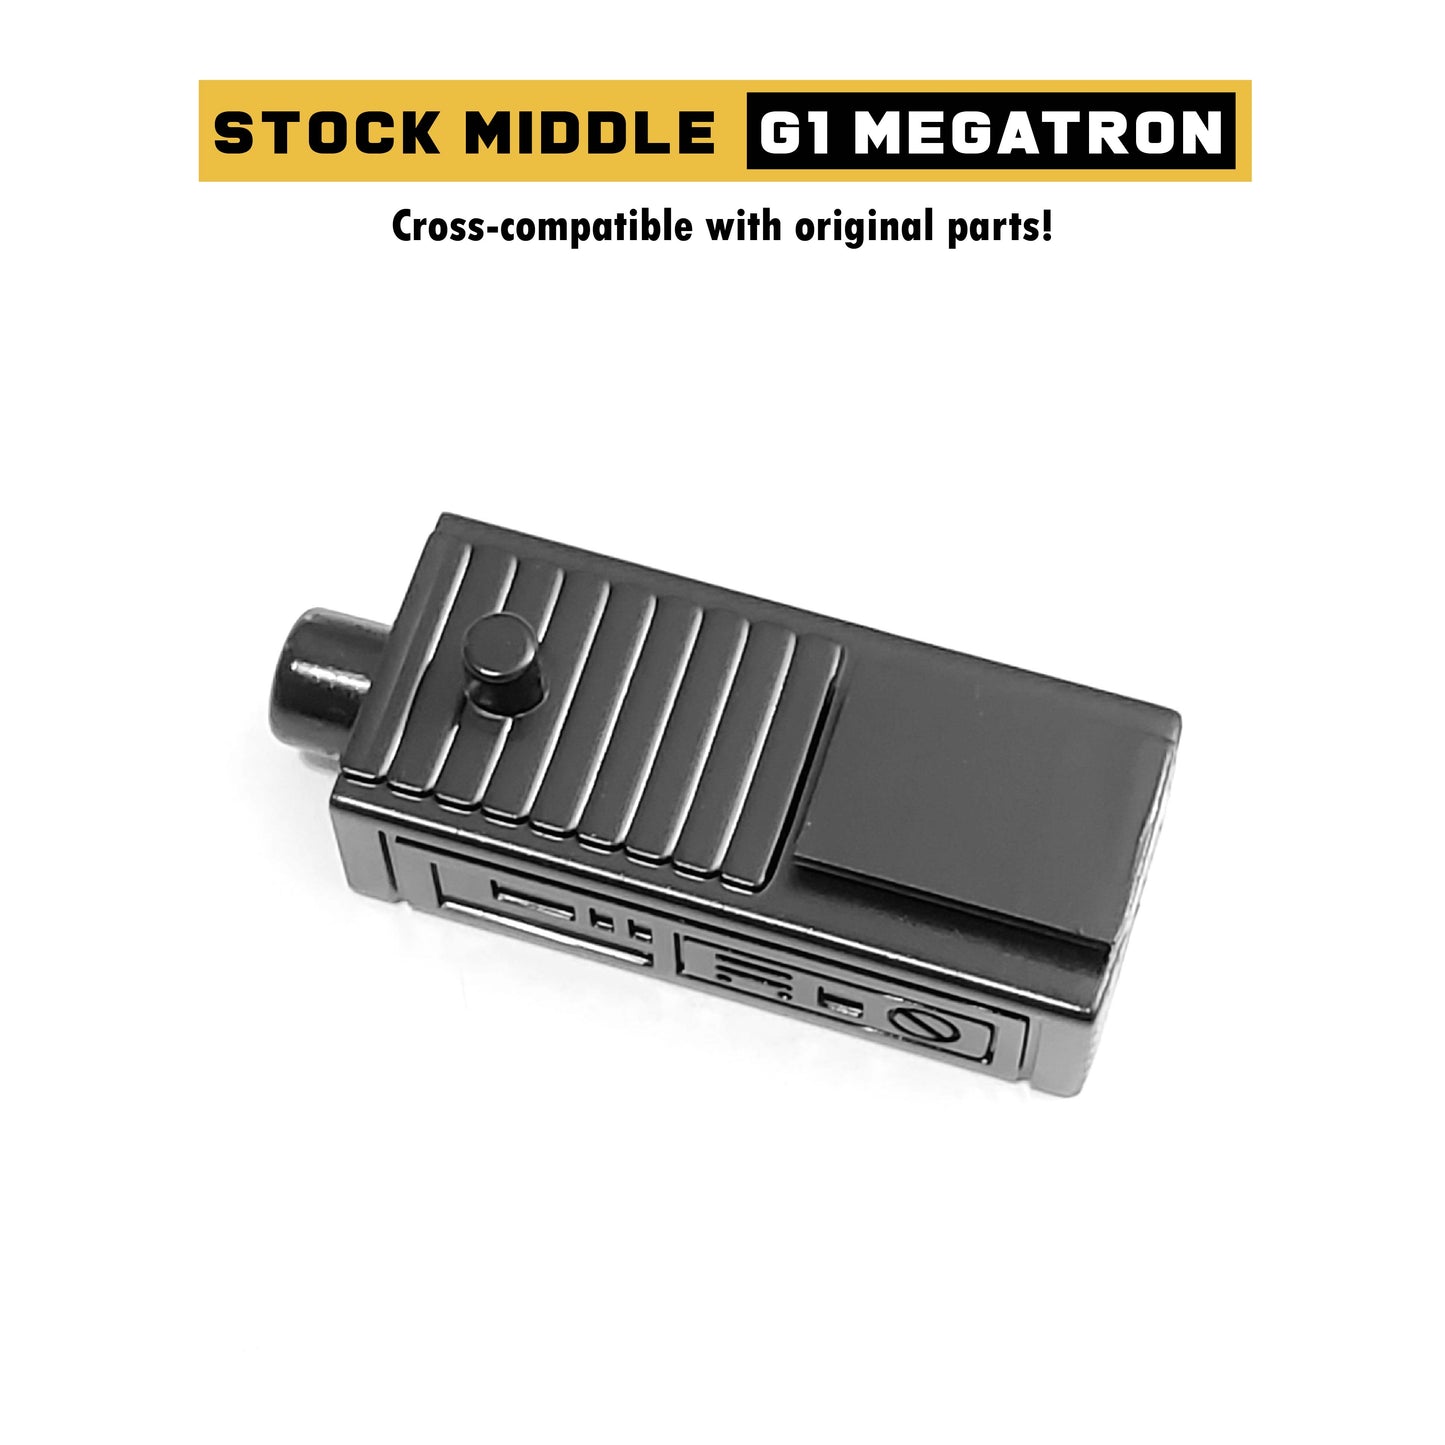 Stock Middle Part for G1 Megatron